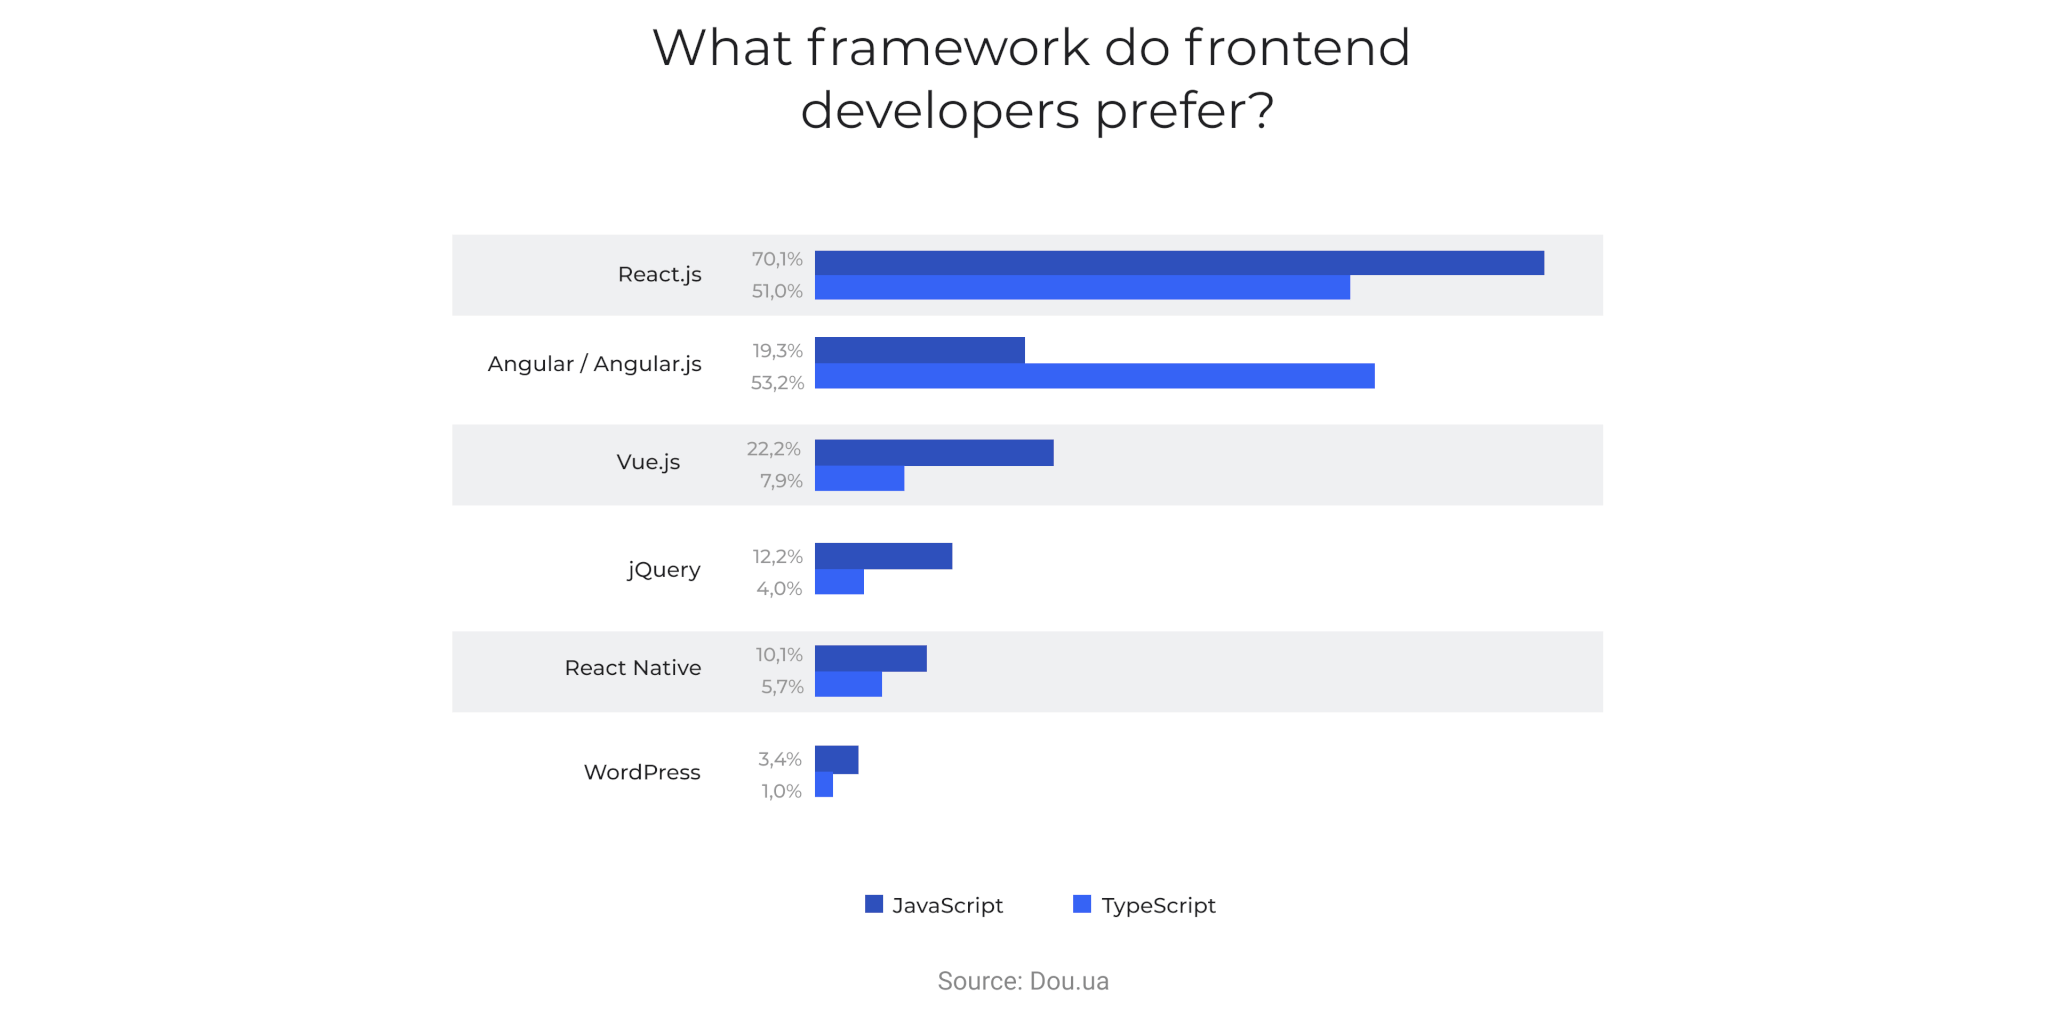 What framework do frontend 
developers prefer?